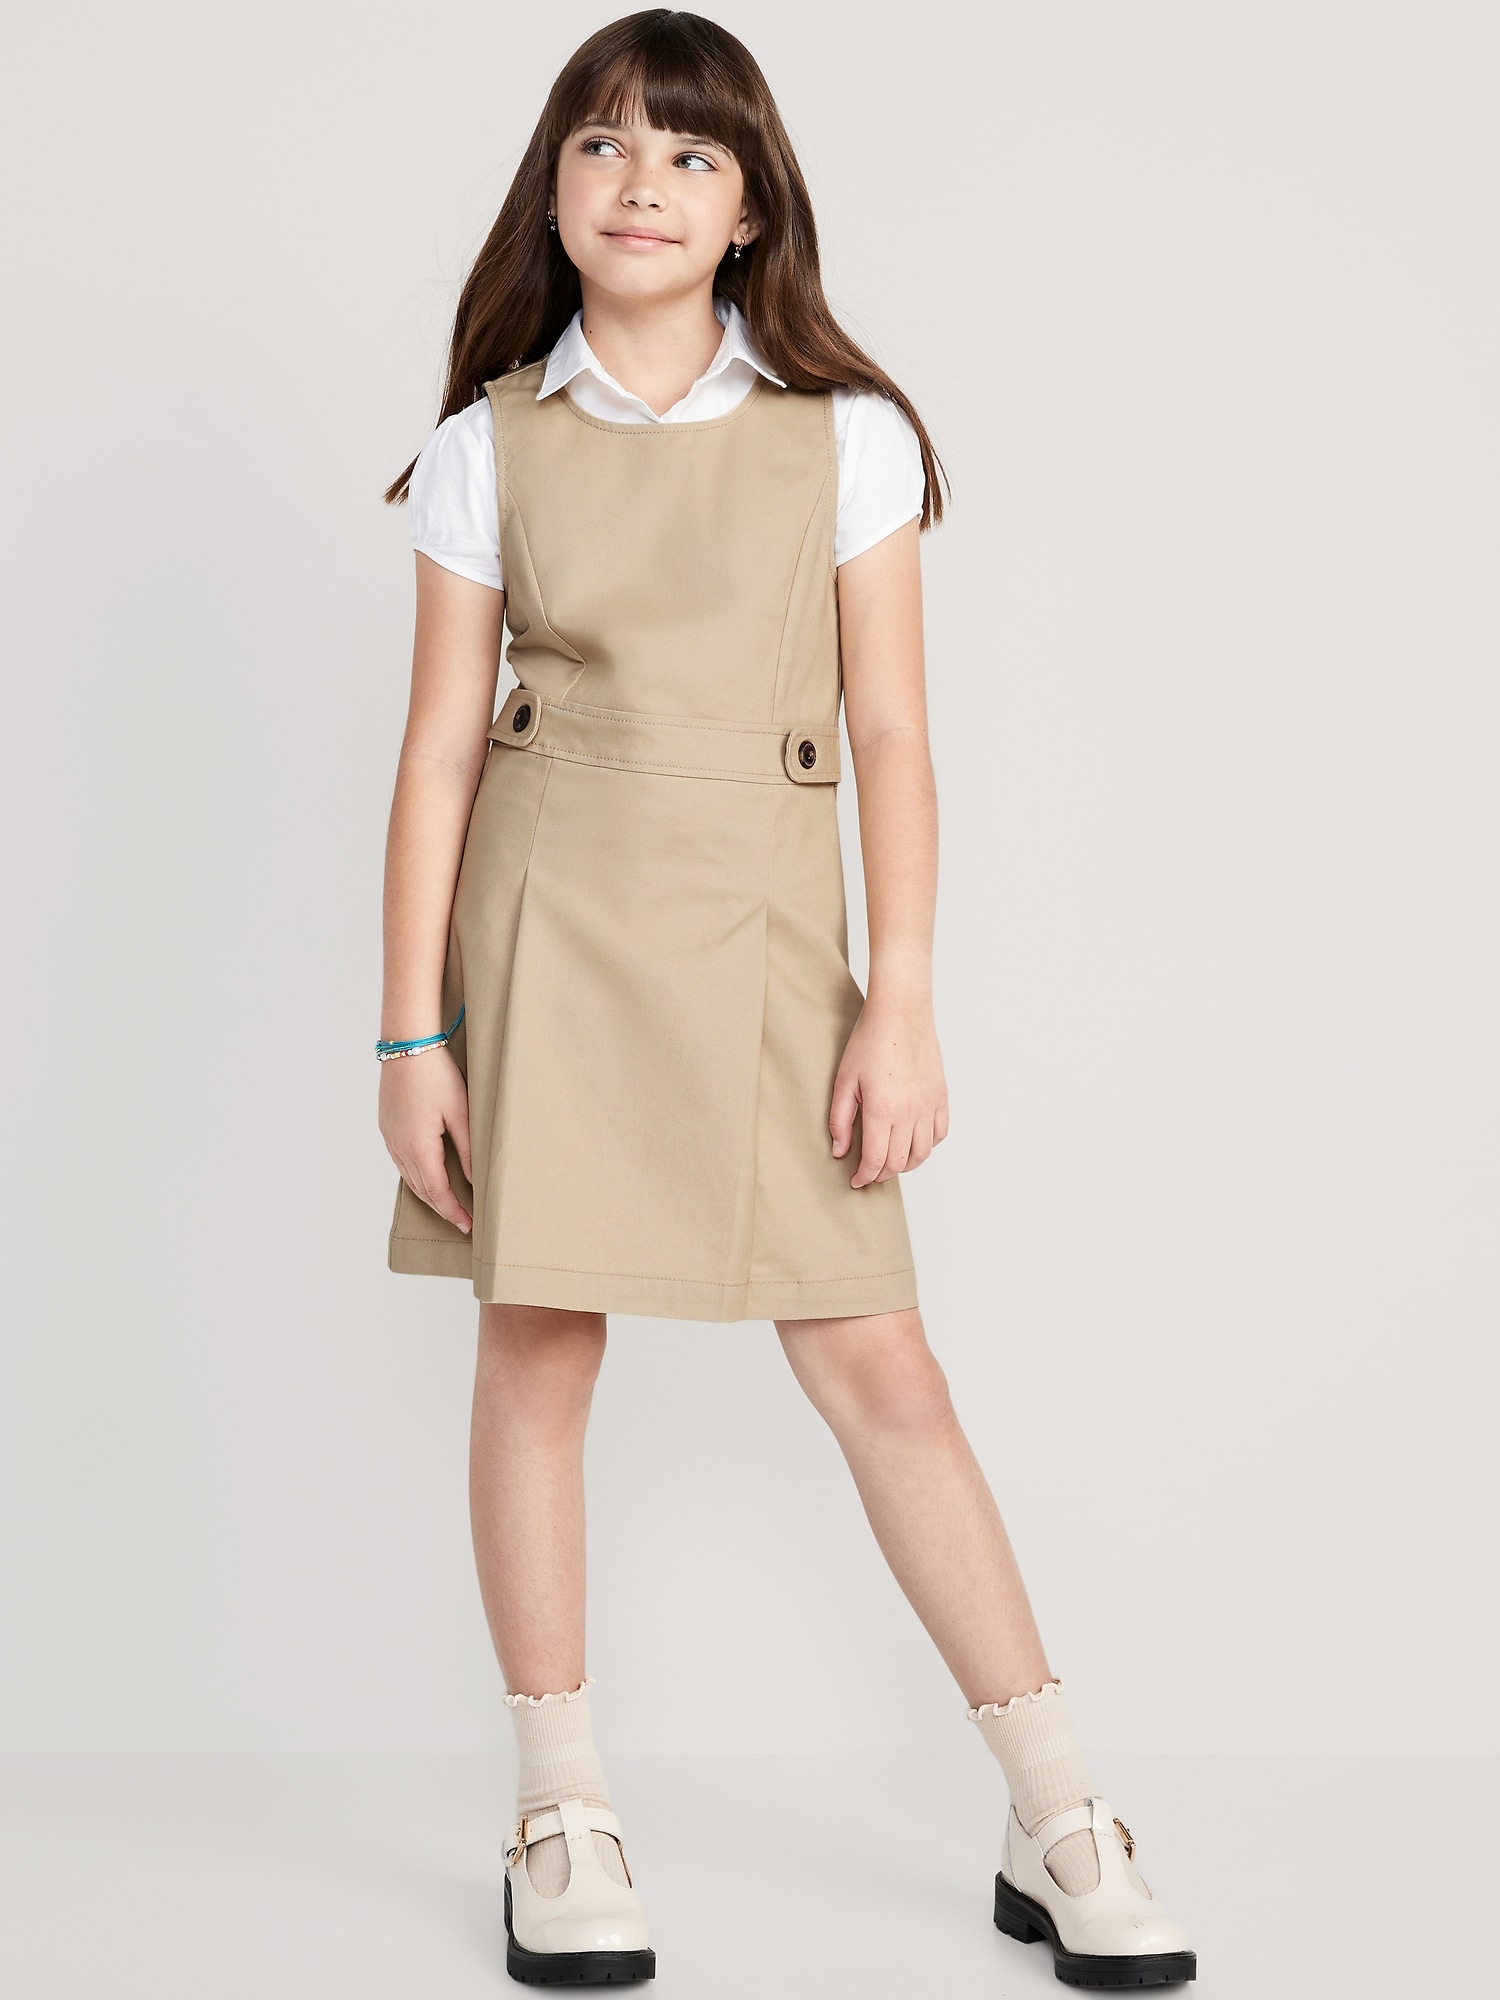 Old Navy Sleeveless School Uniform Dress for Girls beige. 1